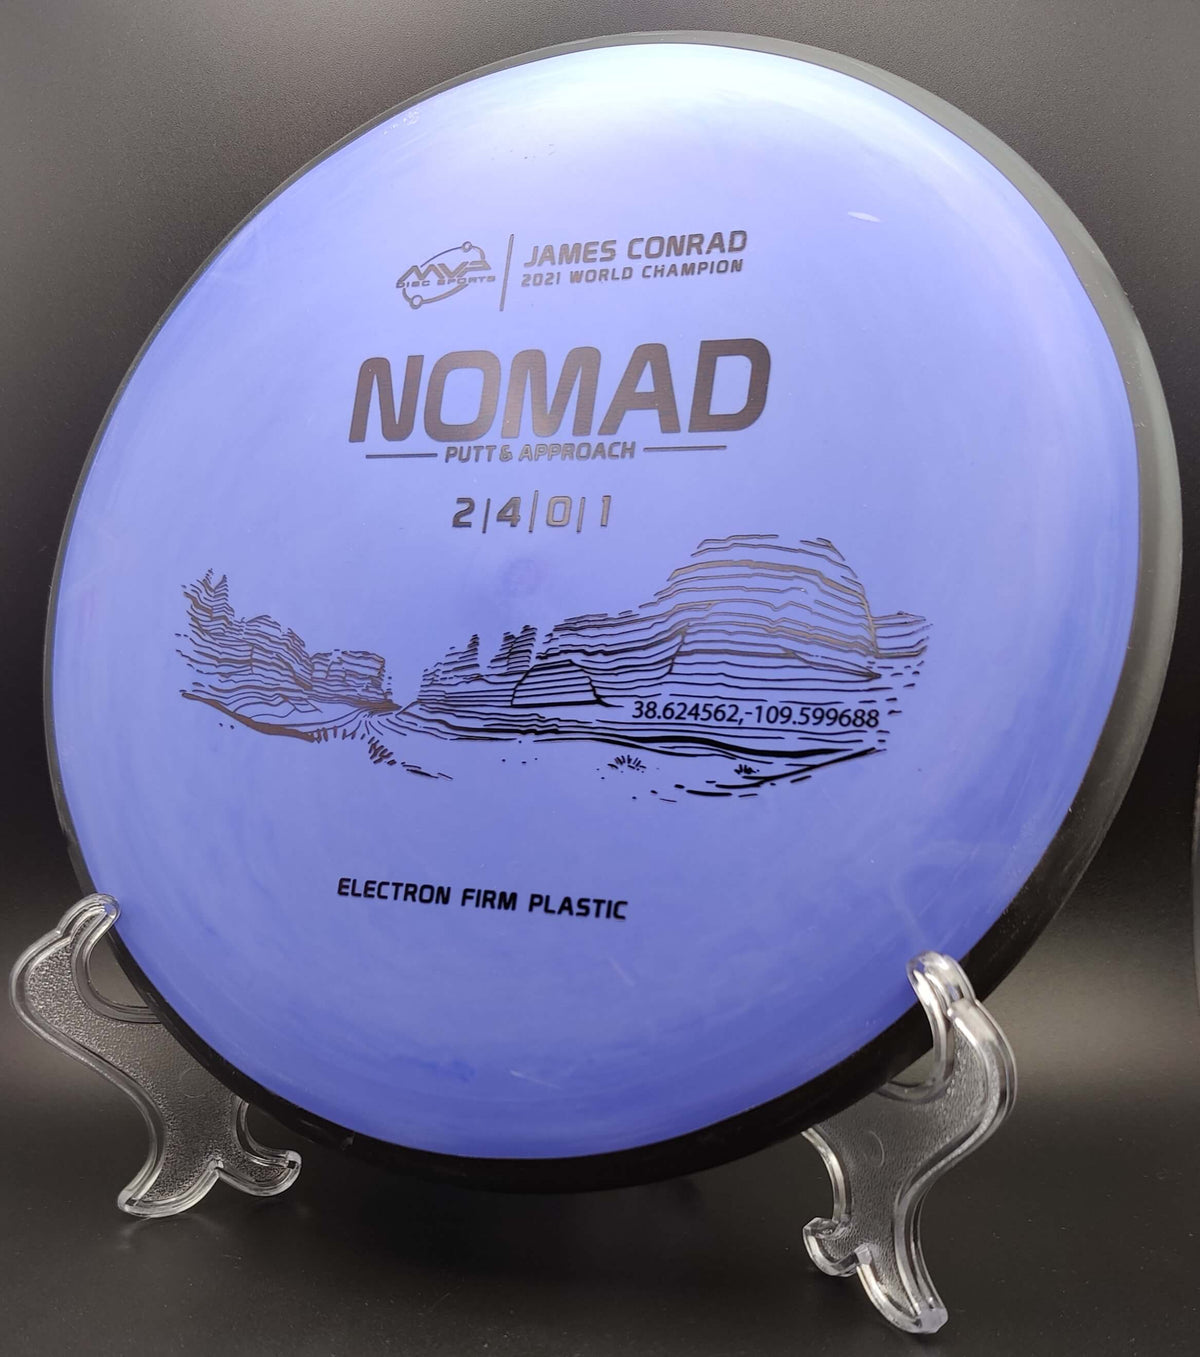 MVP Nomad - Electron Firm- James Conrad 2021 World Champion